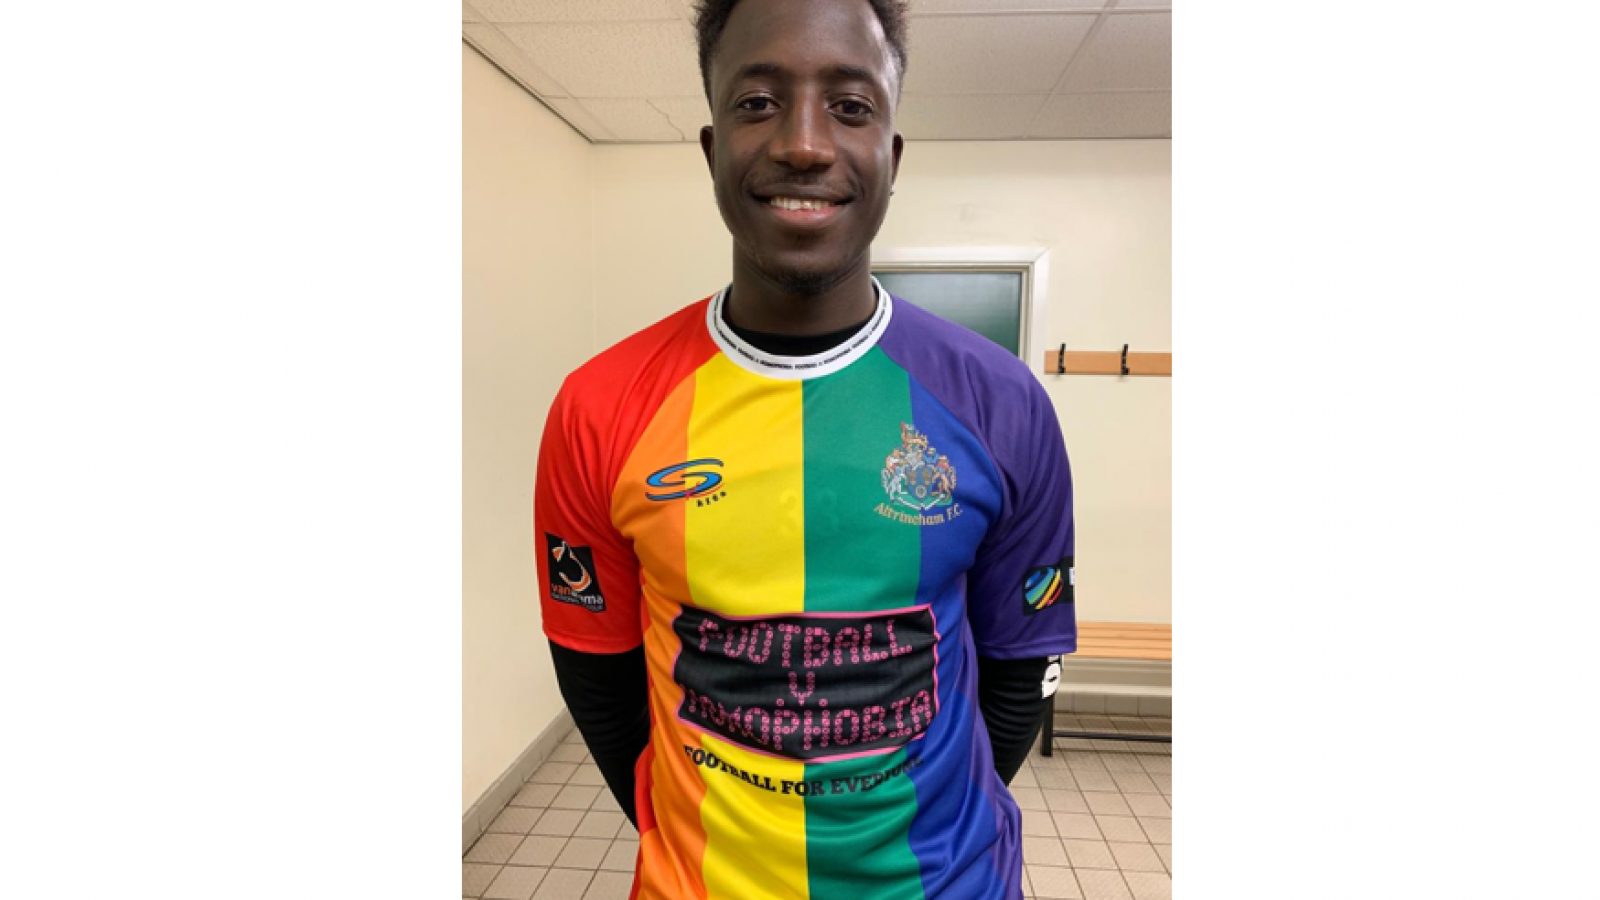 Altrincham FC go full rainbow with LGBTQ+ inspired shirt